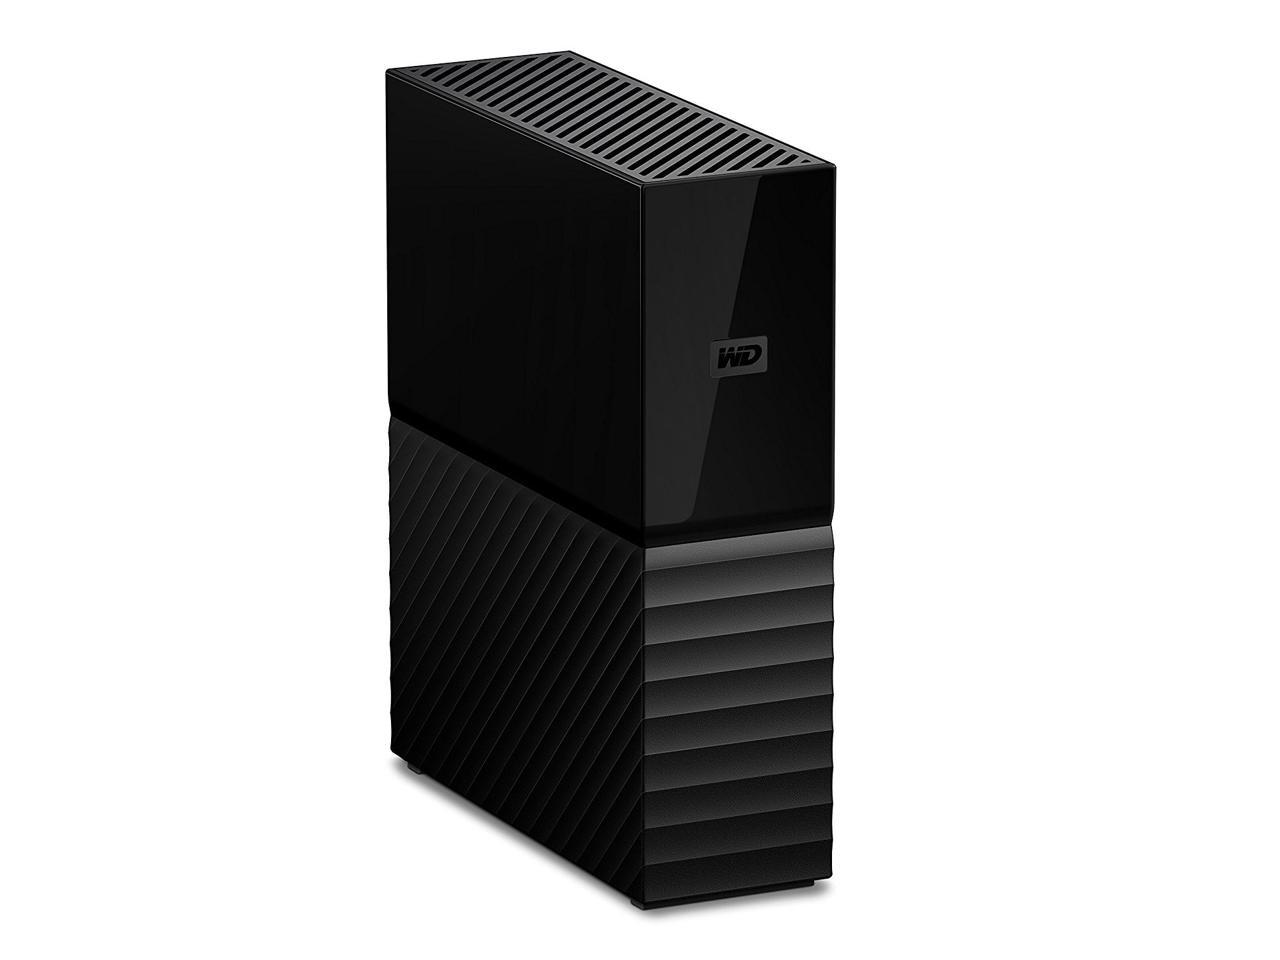 Wd My Book 3Tb Desktop External Hard Drive For Windows/Mac/Laptop, Usb 3.0 Black (Wdbbgb0030Hbk-Nesn)